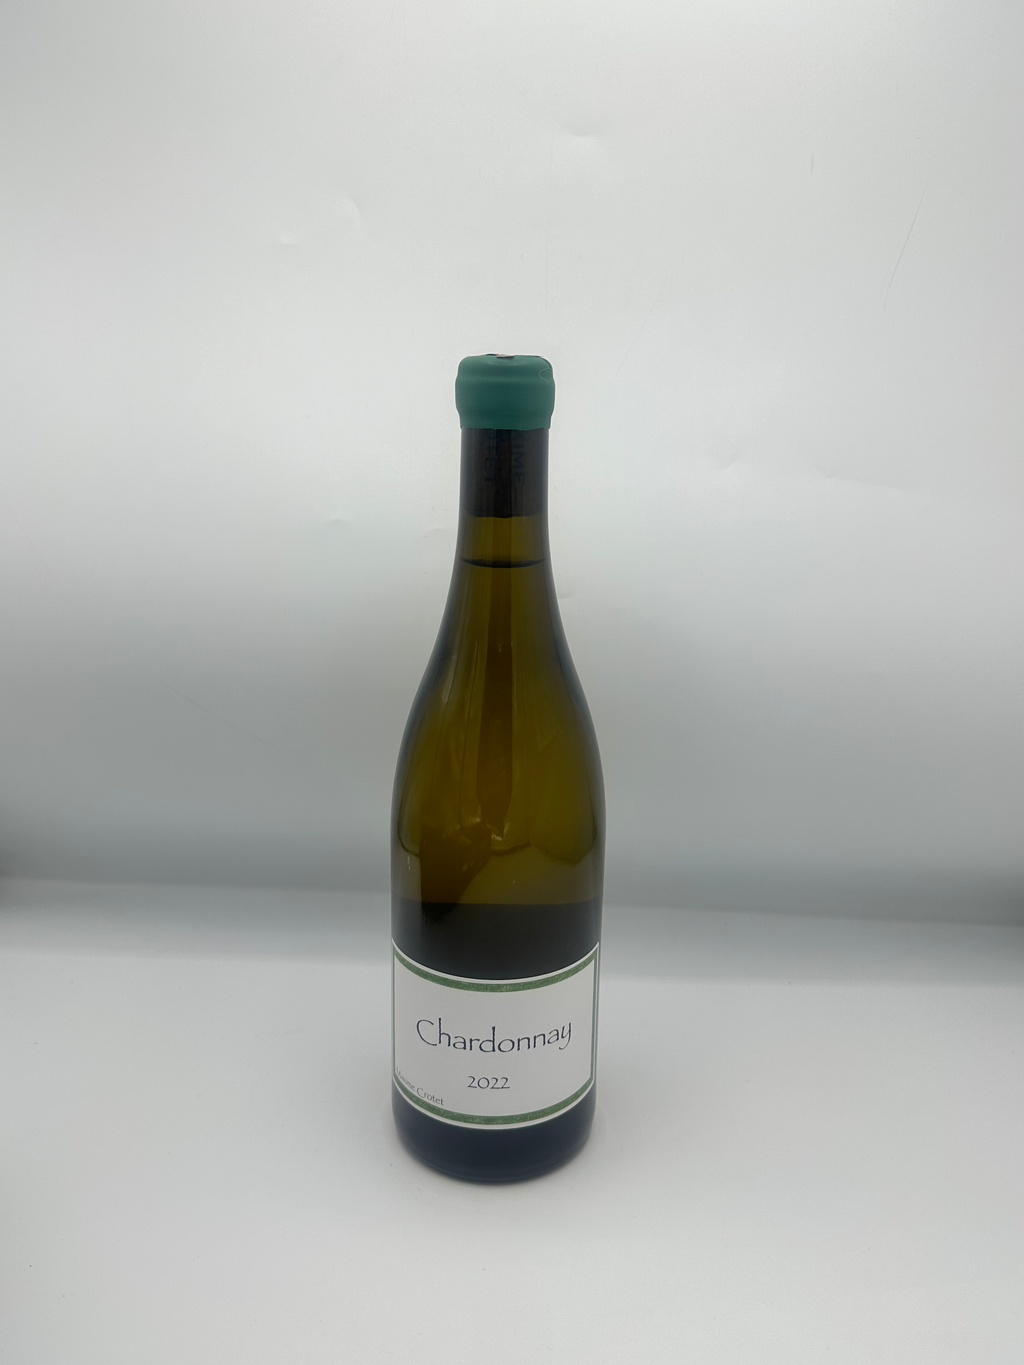 VDF "Chardonnay" 2022 Branco - Maxime Crotet